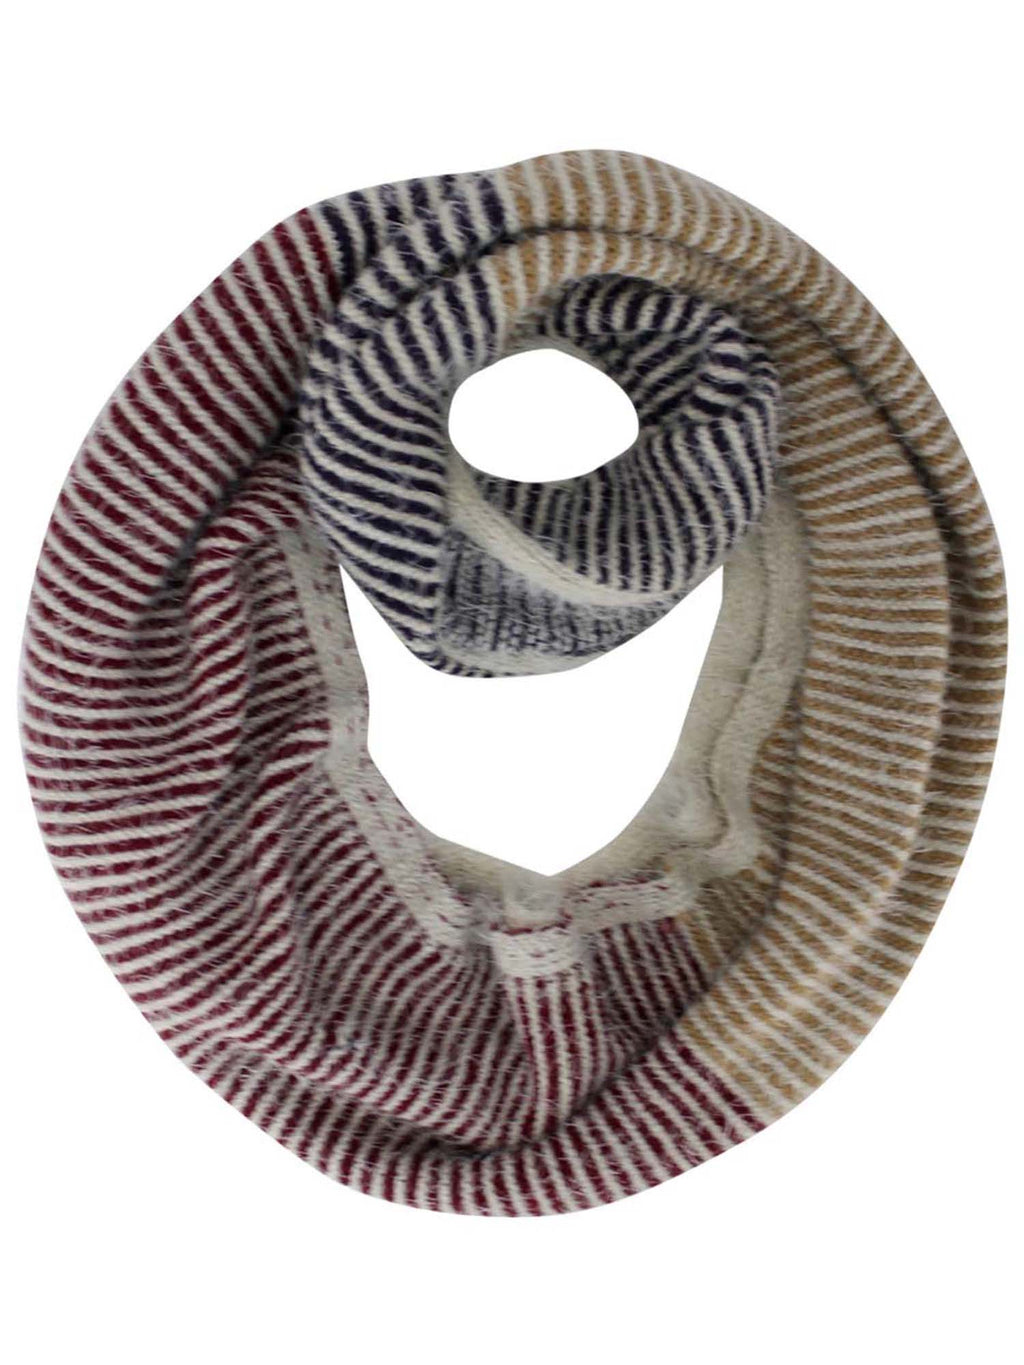 Striped Fuzzy Eyelash Knit Unisex Winter Infinity Scarf